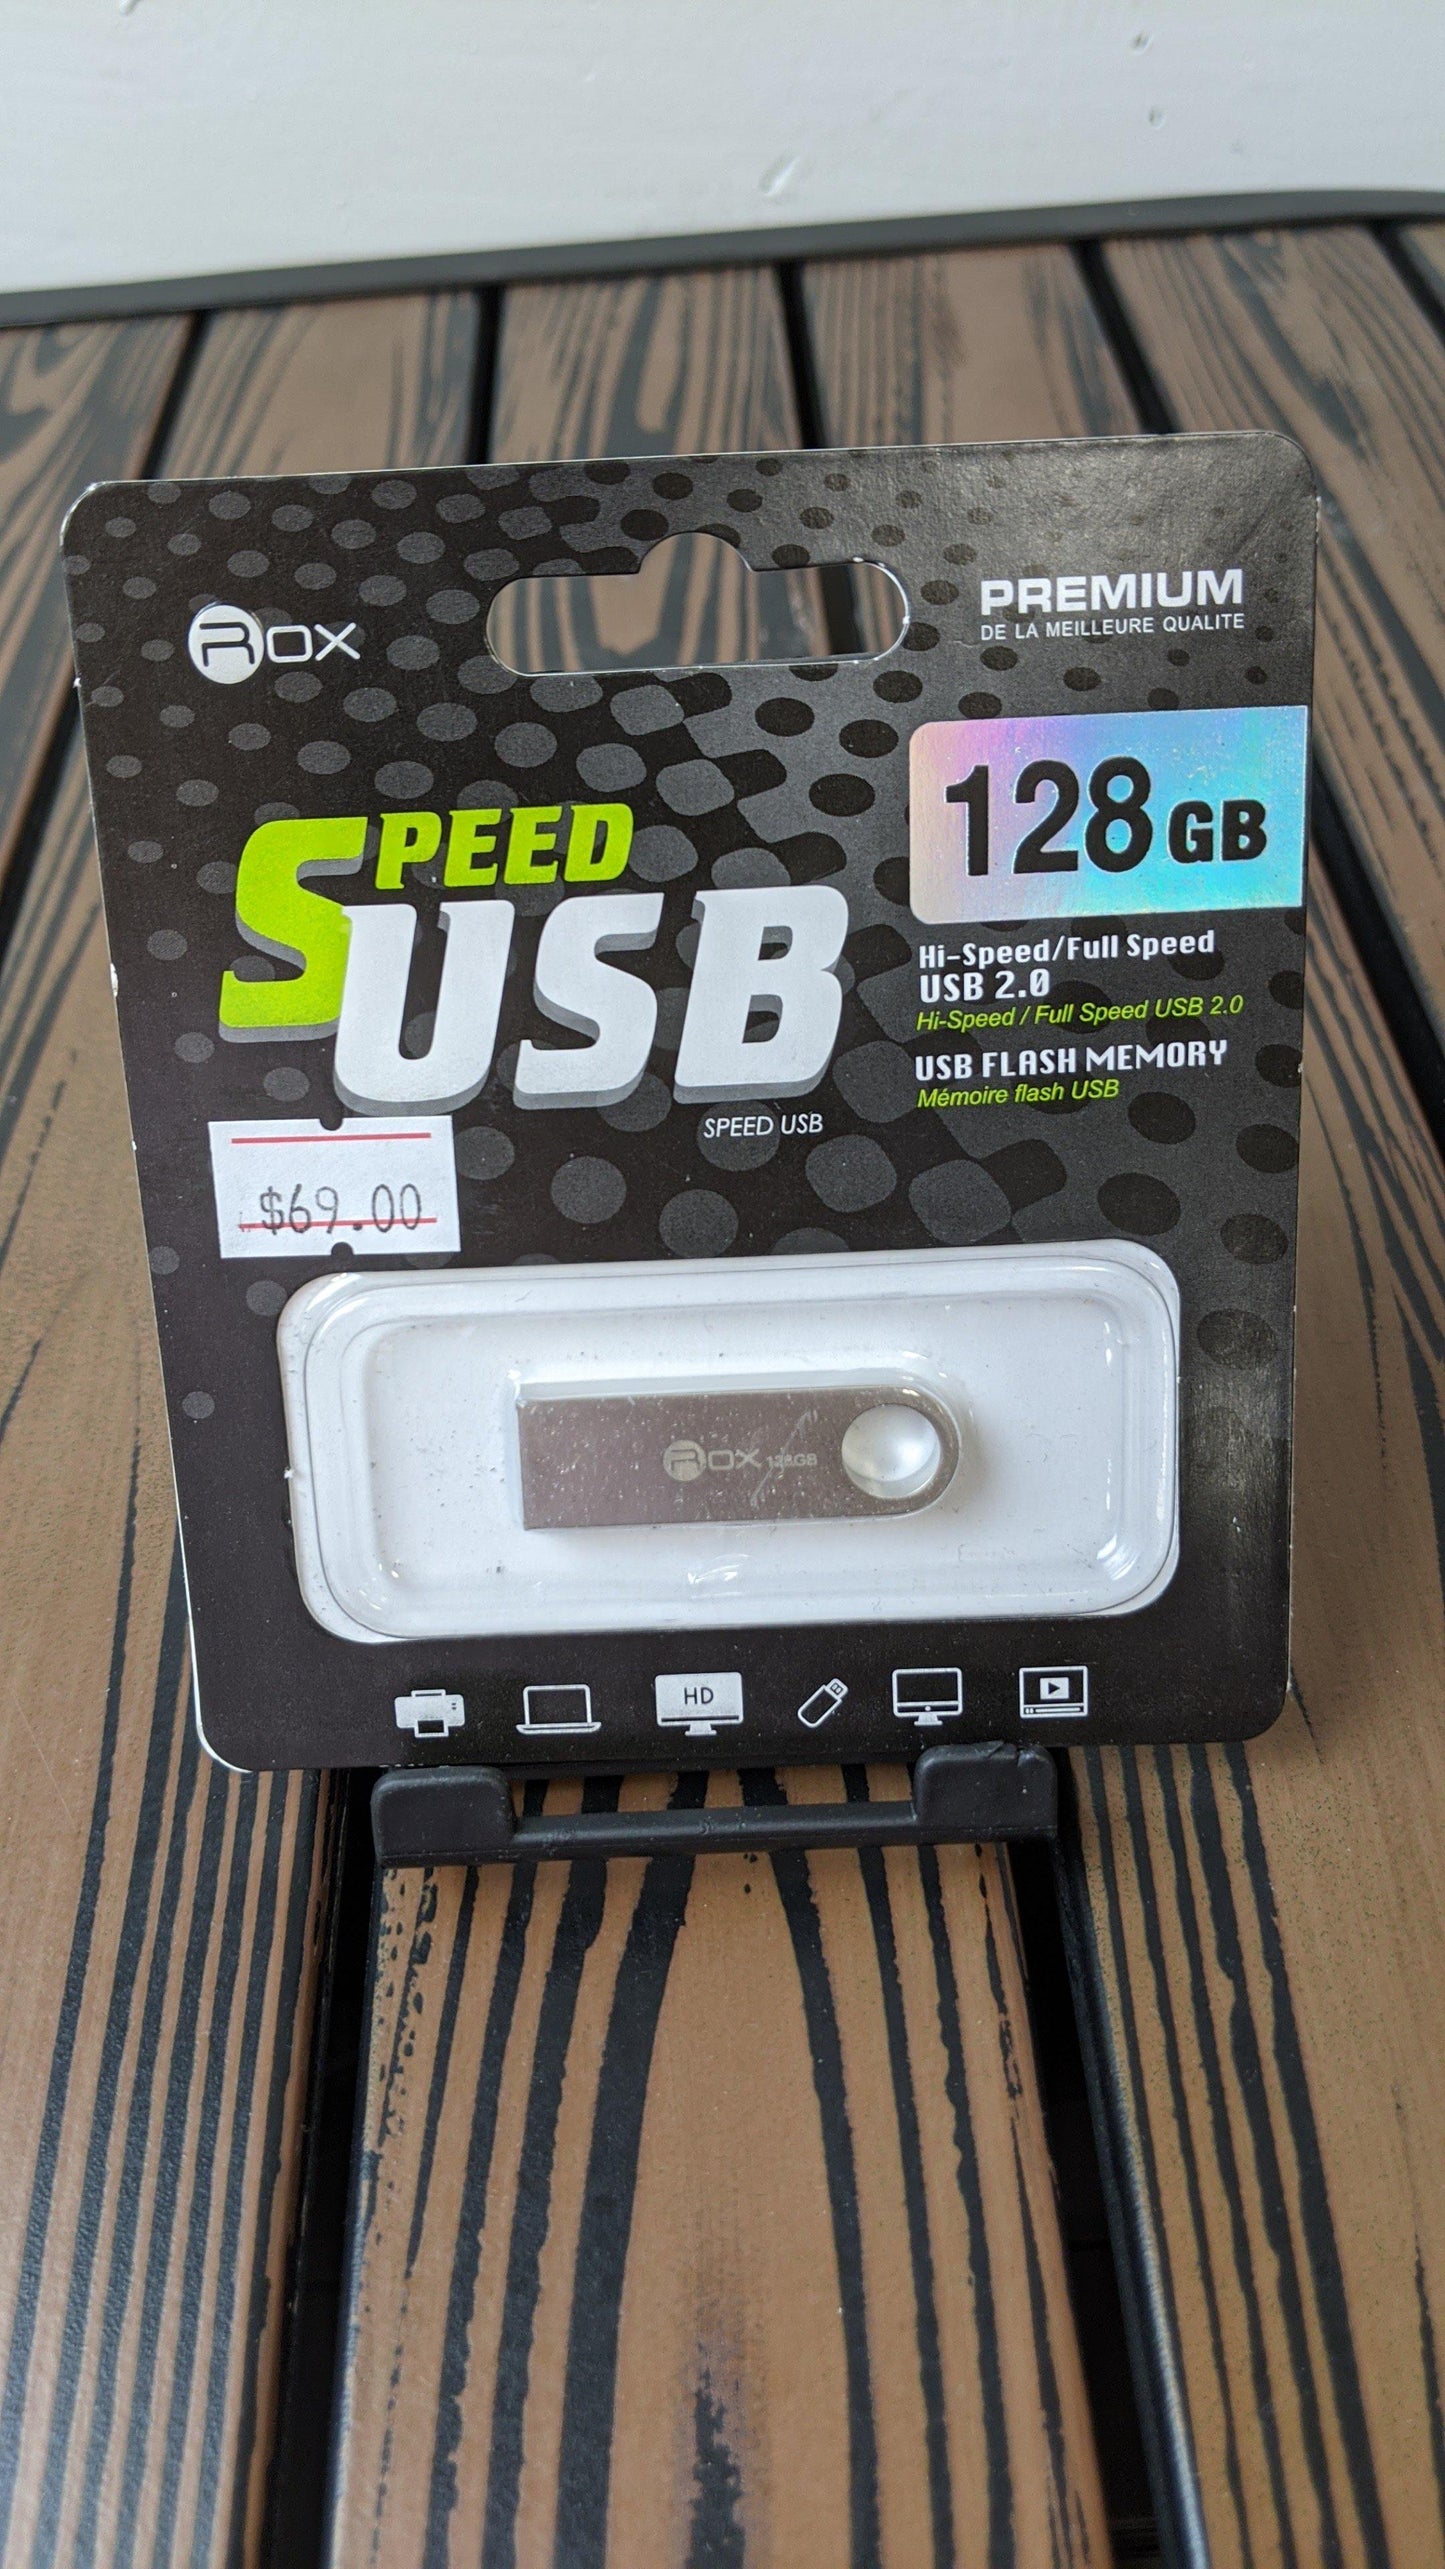 Speed USB 128 GB - PCMaster Pro 